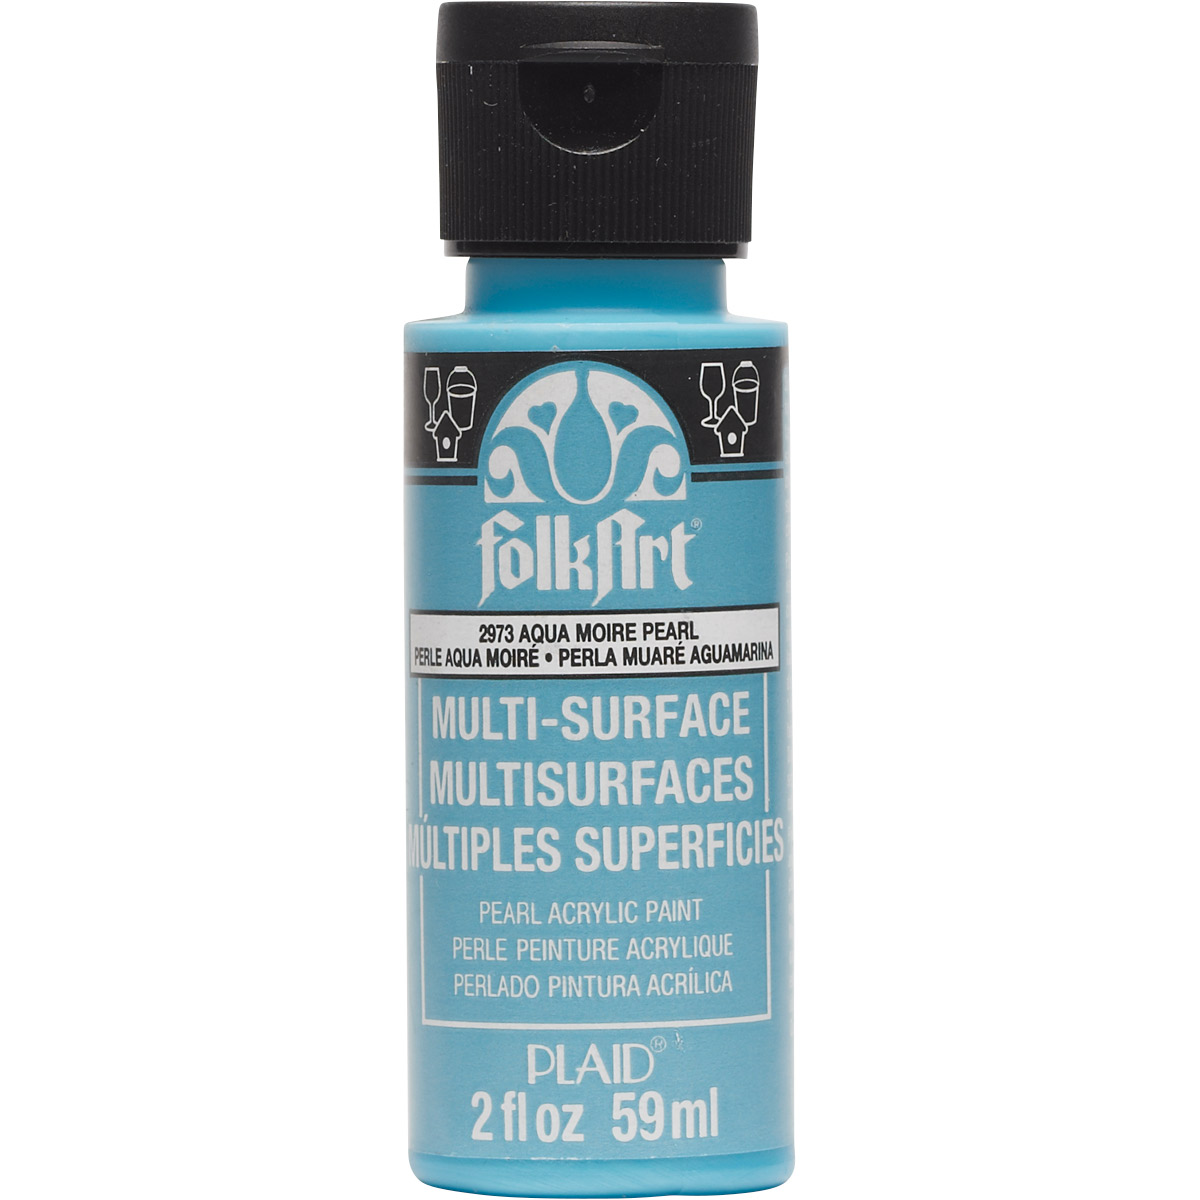 FolkArt ® Multi-Surface Pearl Acrylic Paints - Aqua Moire, 2 oz. - 2973